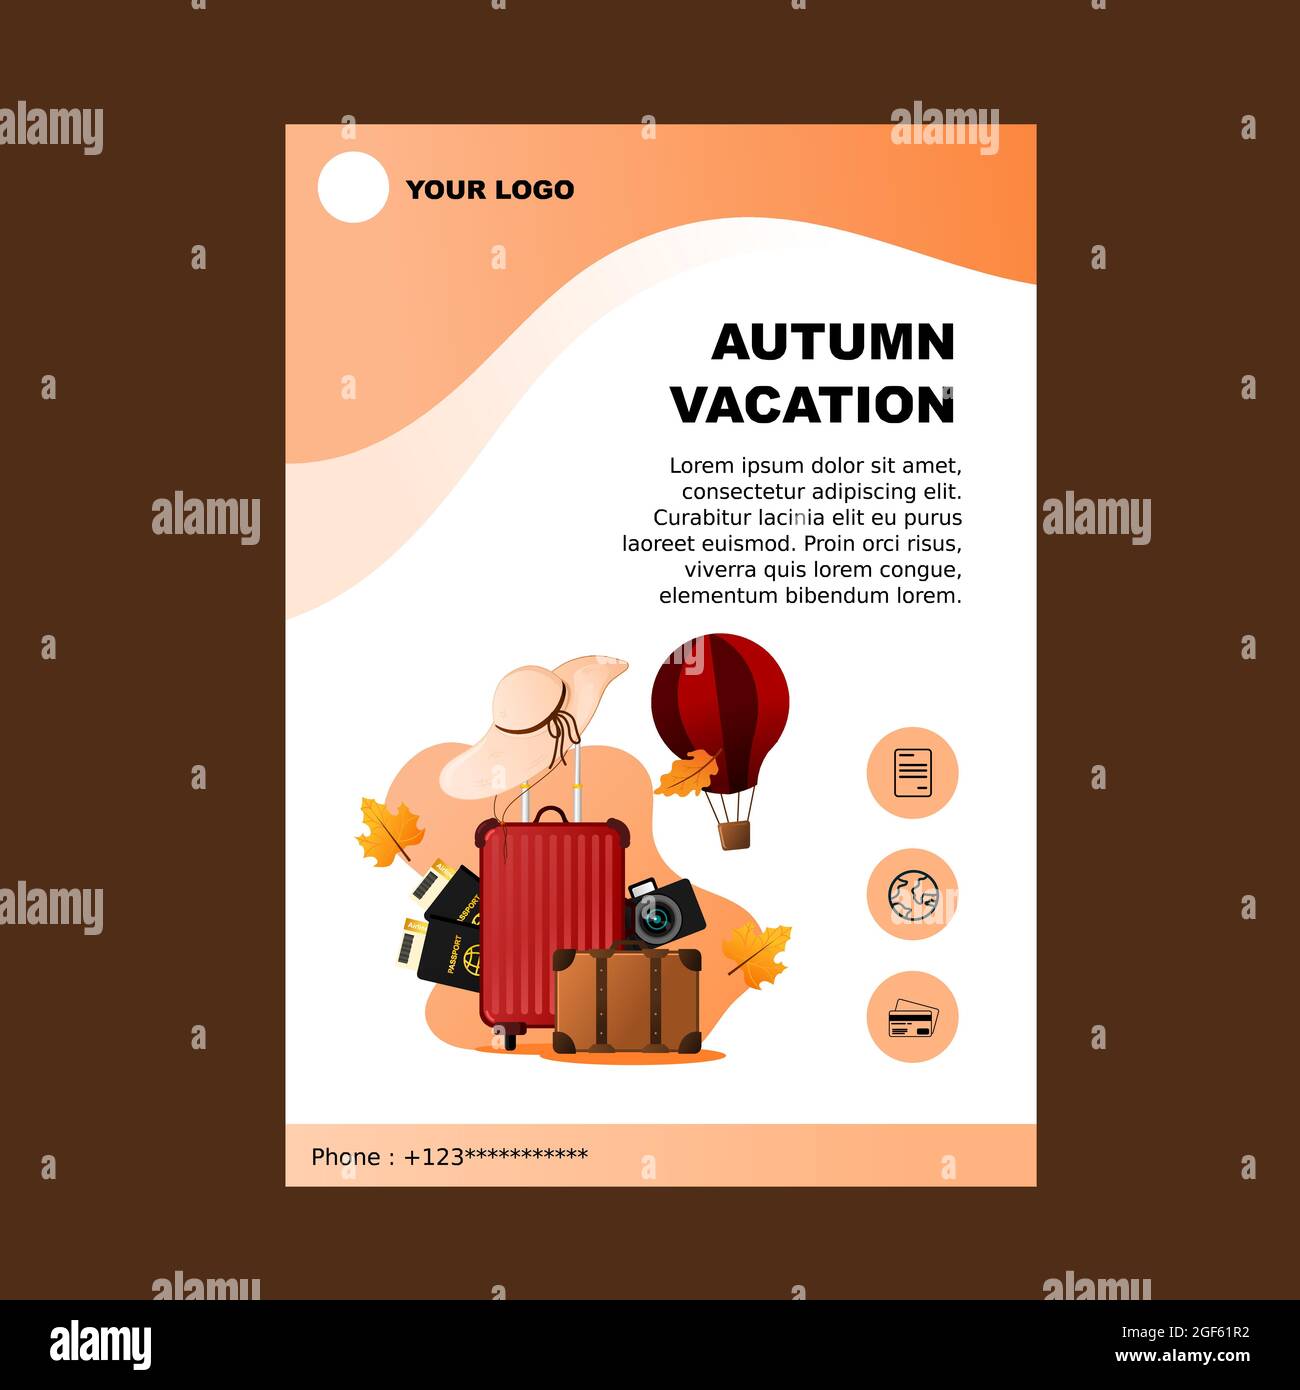 autumn vacation vector illustration flyer design size A4 Stock Vector